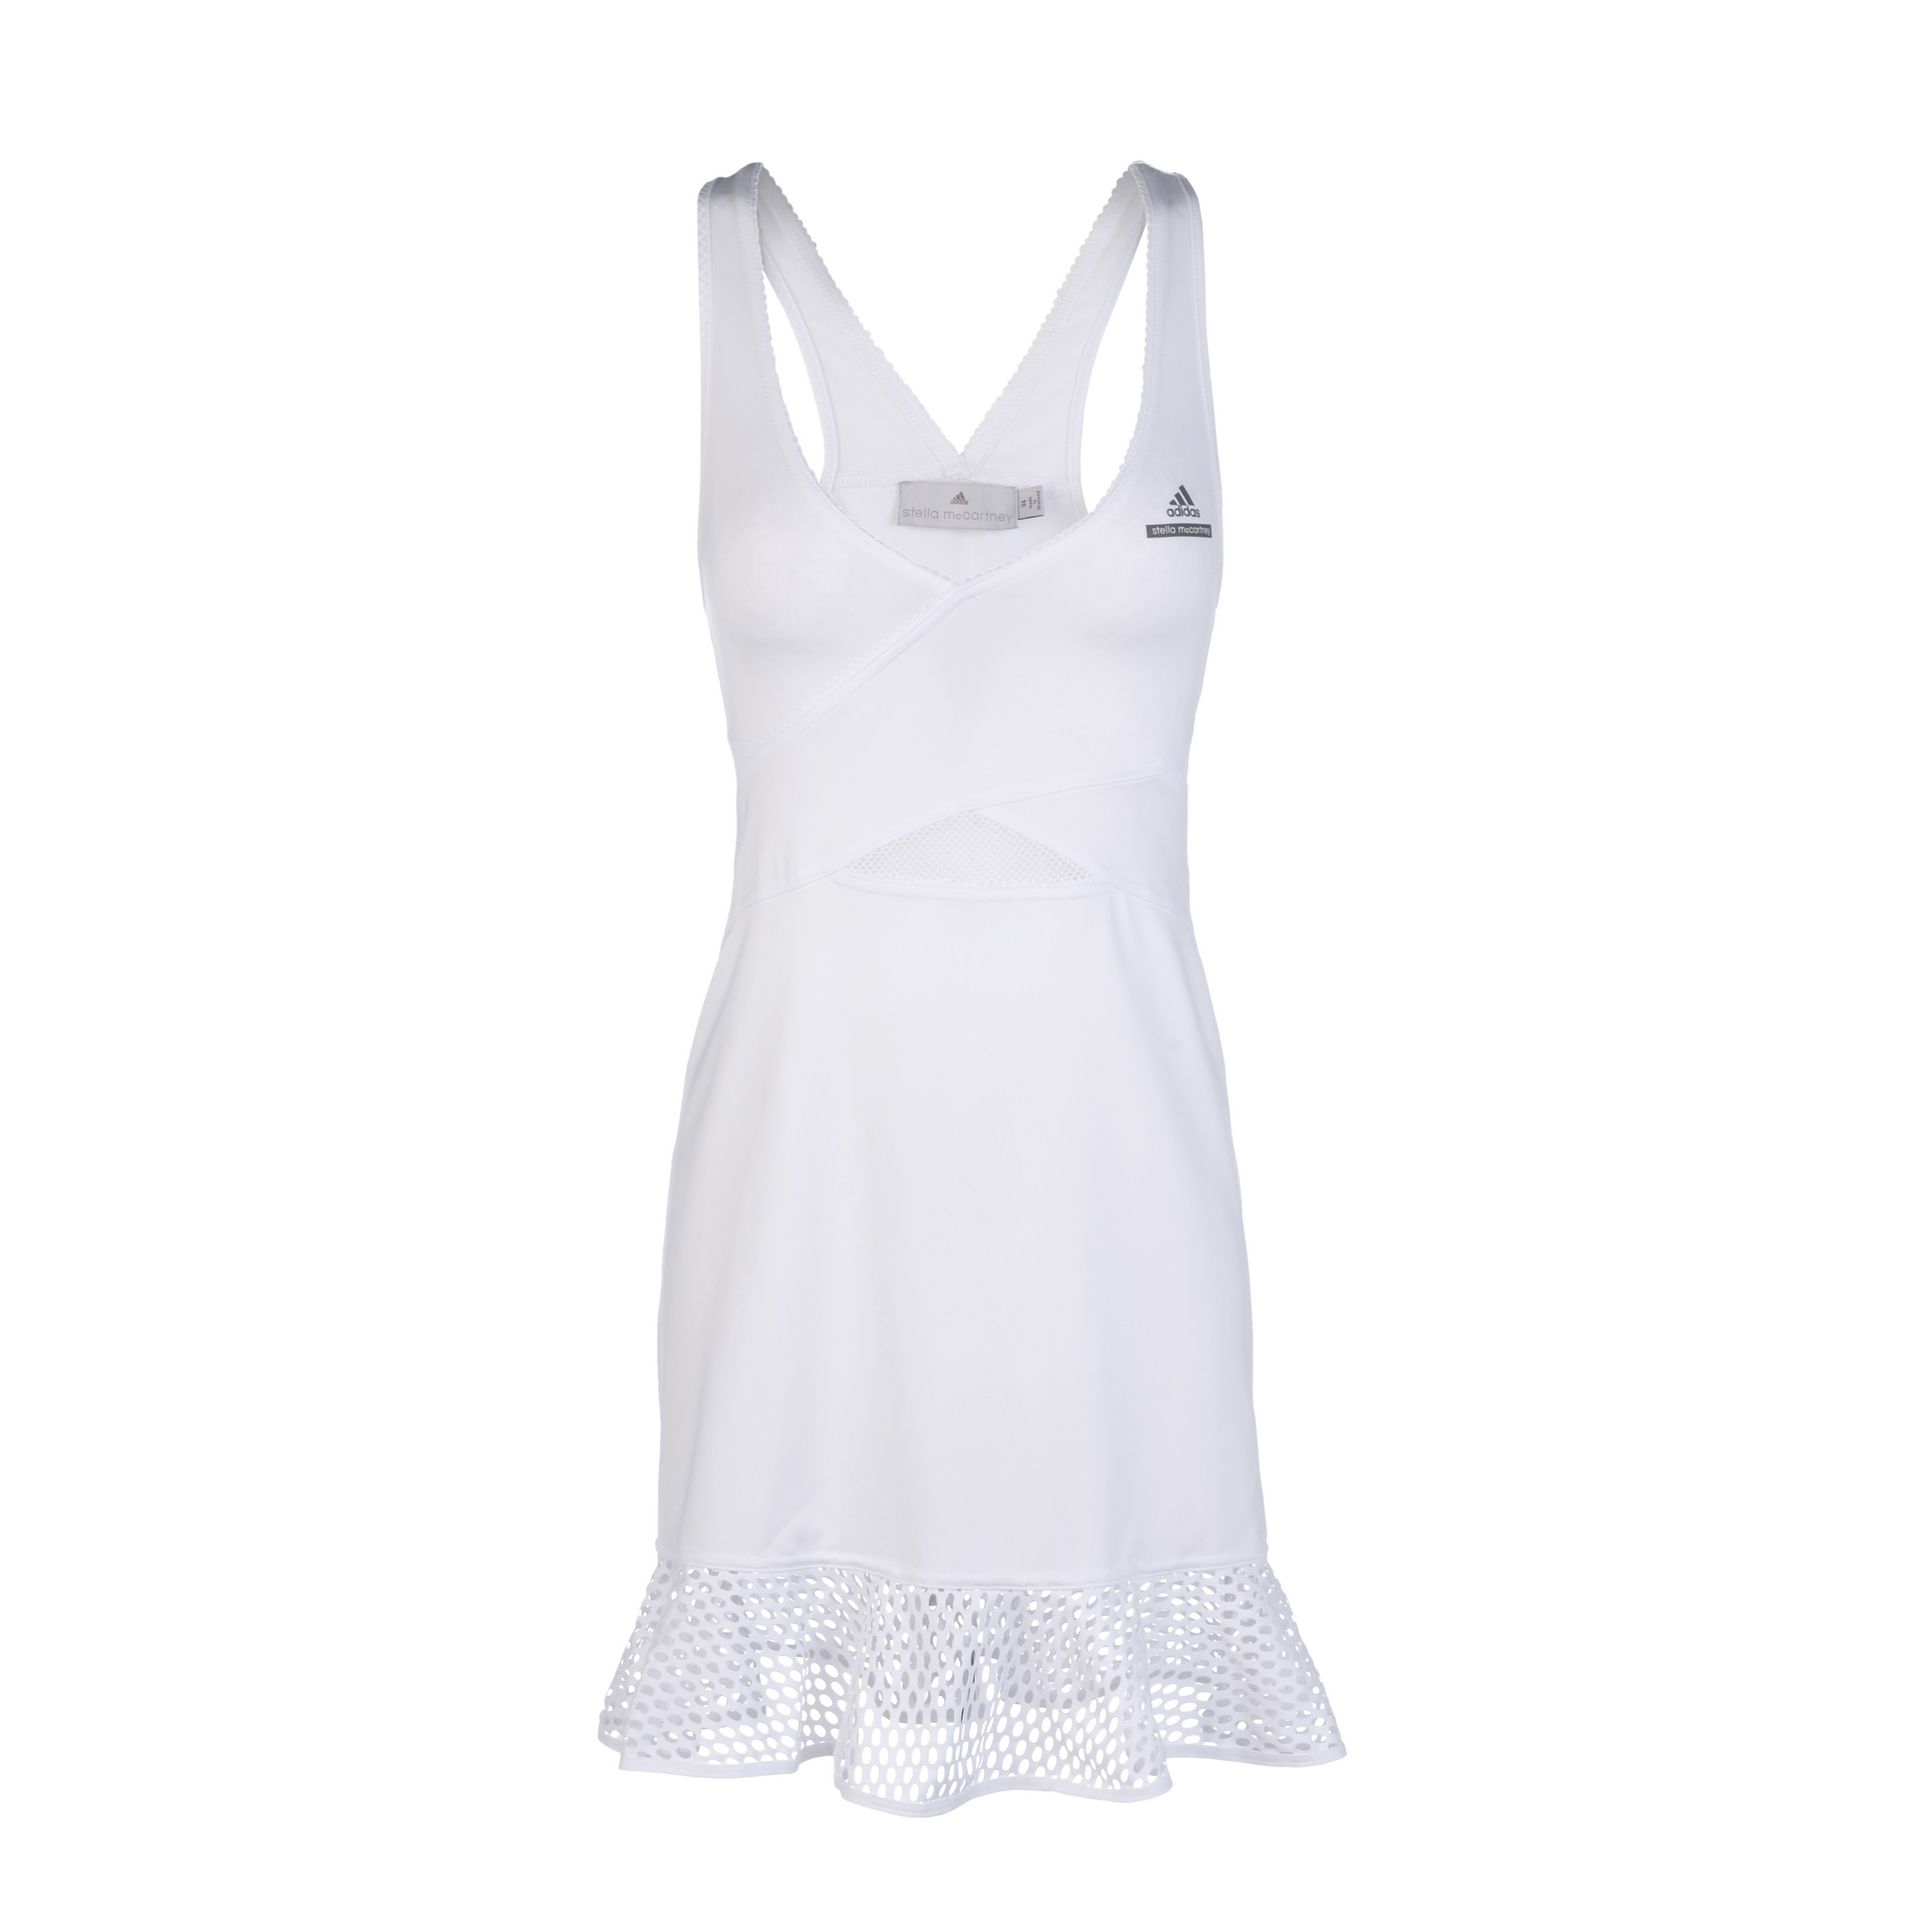 Adidas by stella mccartney White Barricade Tennis Dress in White | Lyst